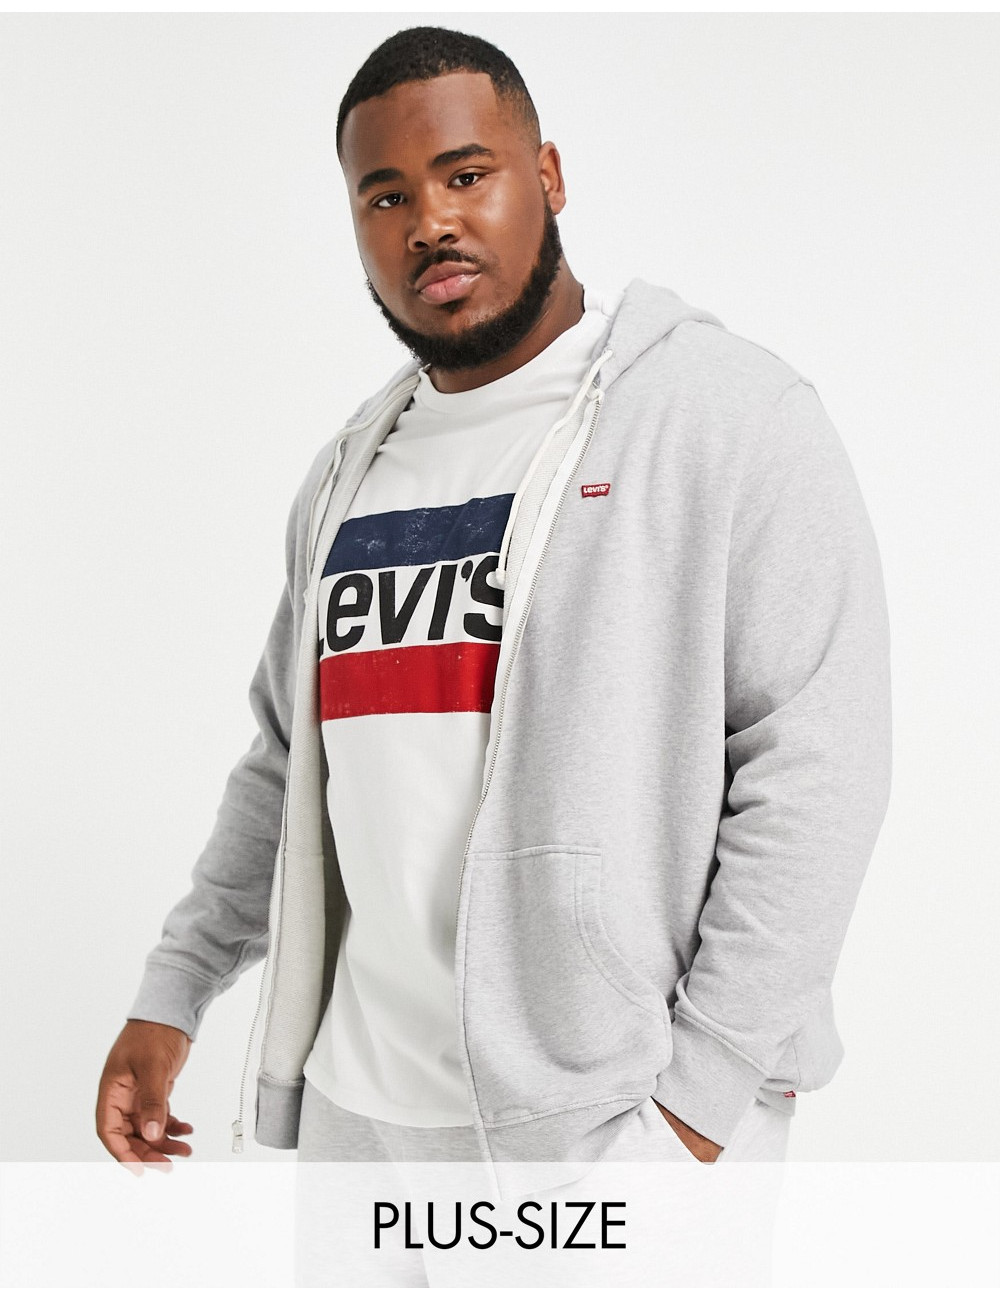 Levi's classic zip up hoodie